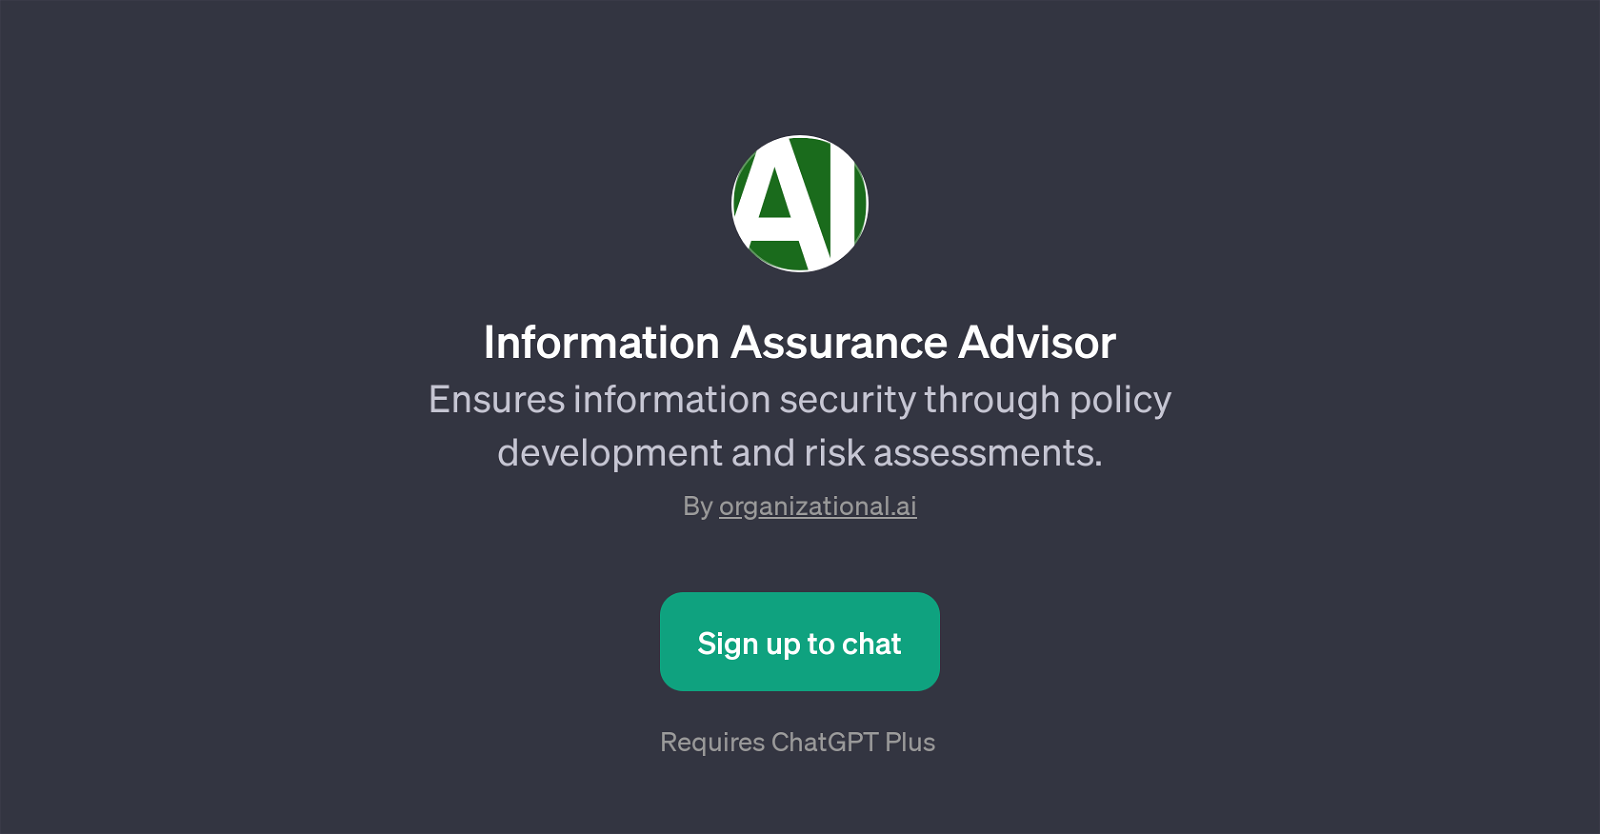 Information Assurance Advisor website